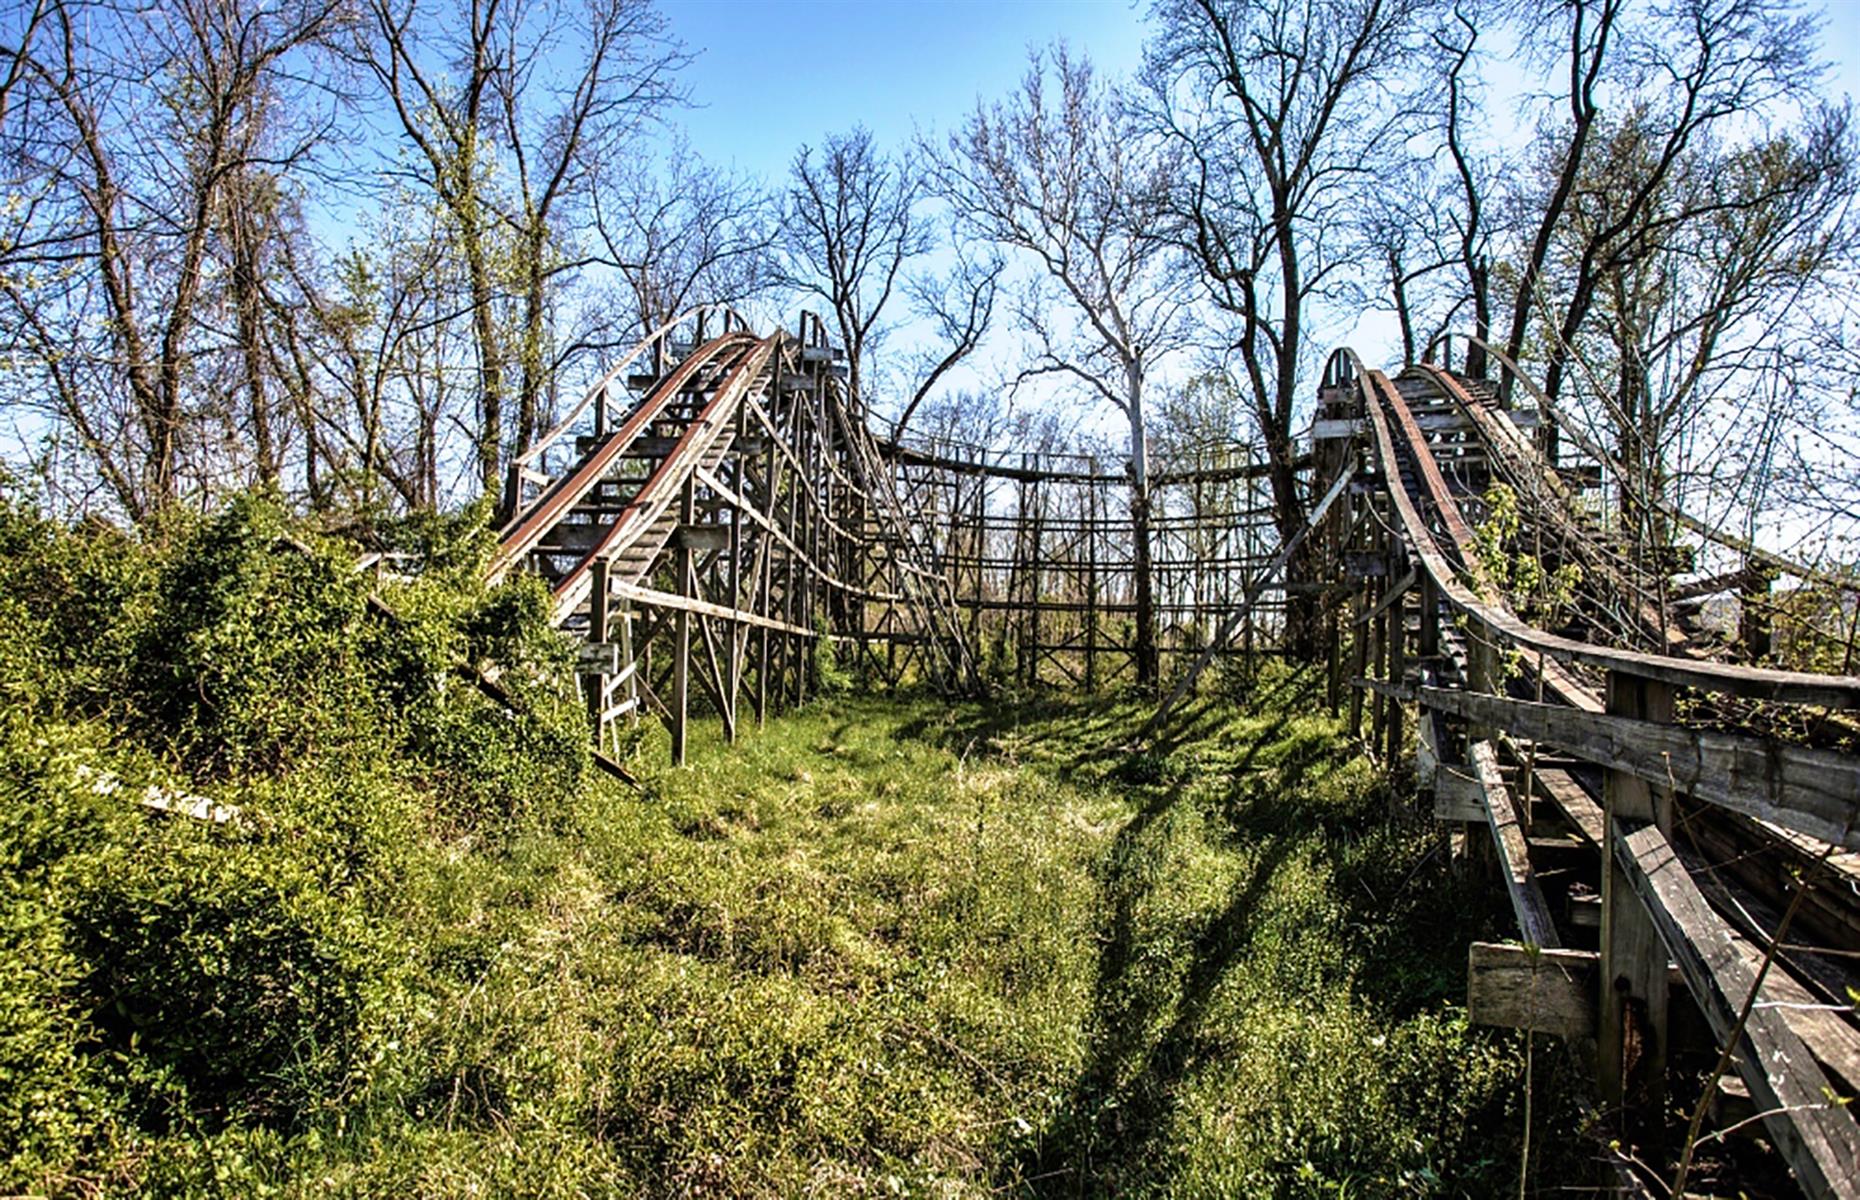 Inside America’s abandoned theme parks.